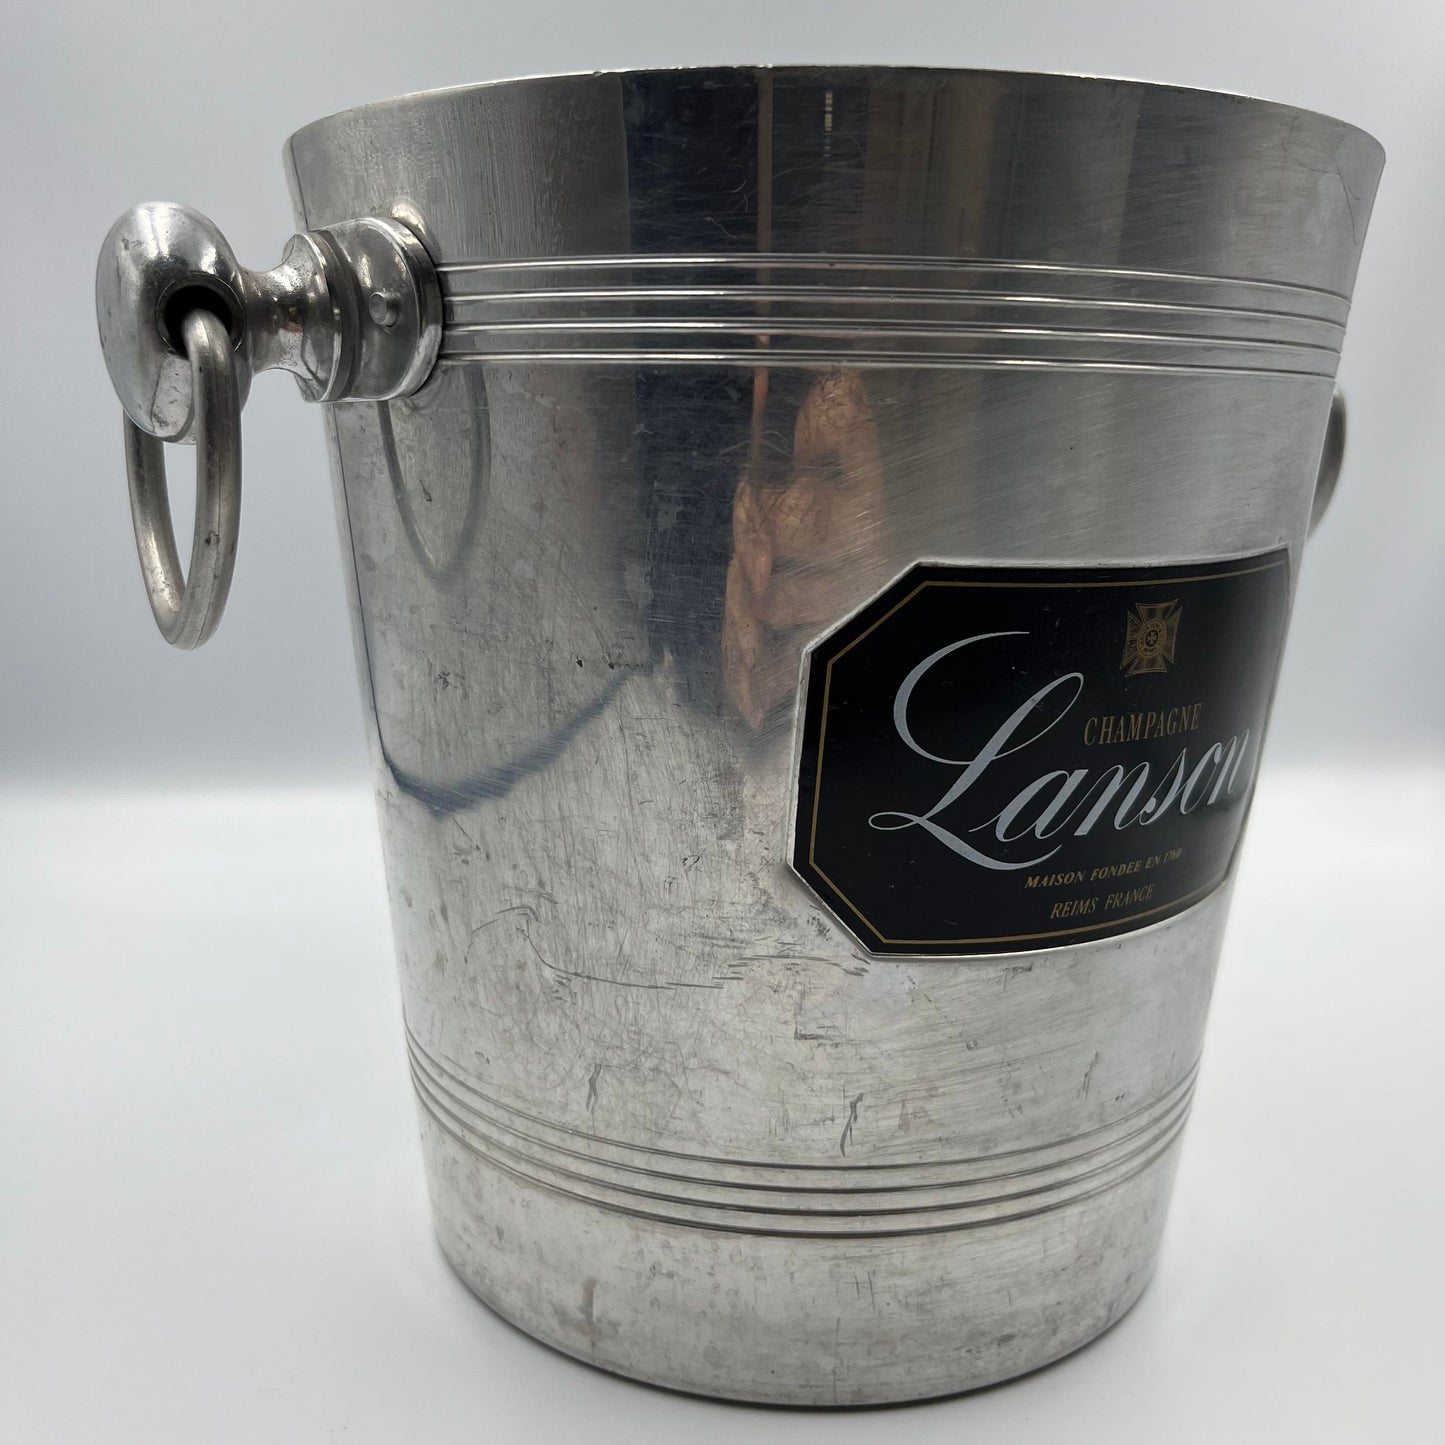 Vintage Lanson Champagne Bucket